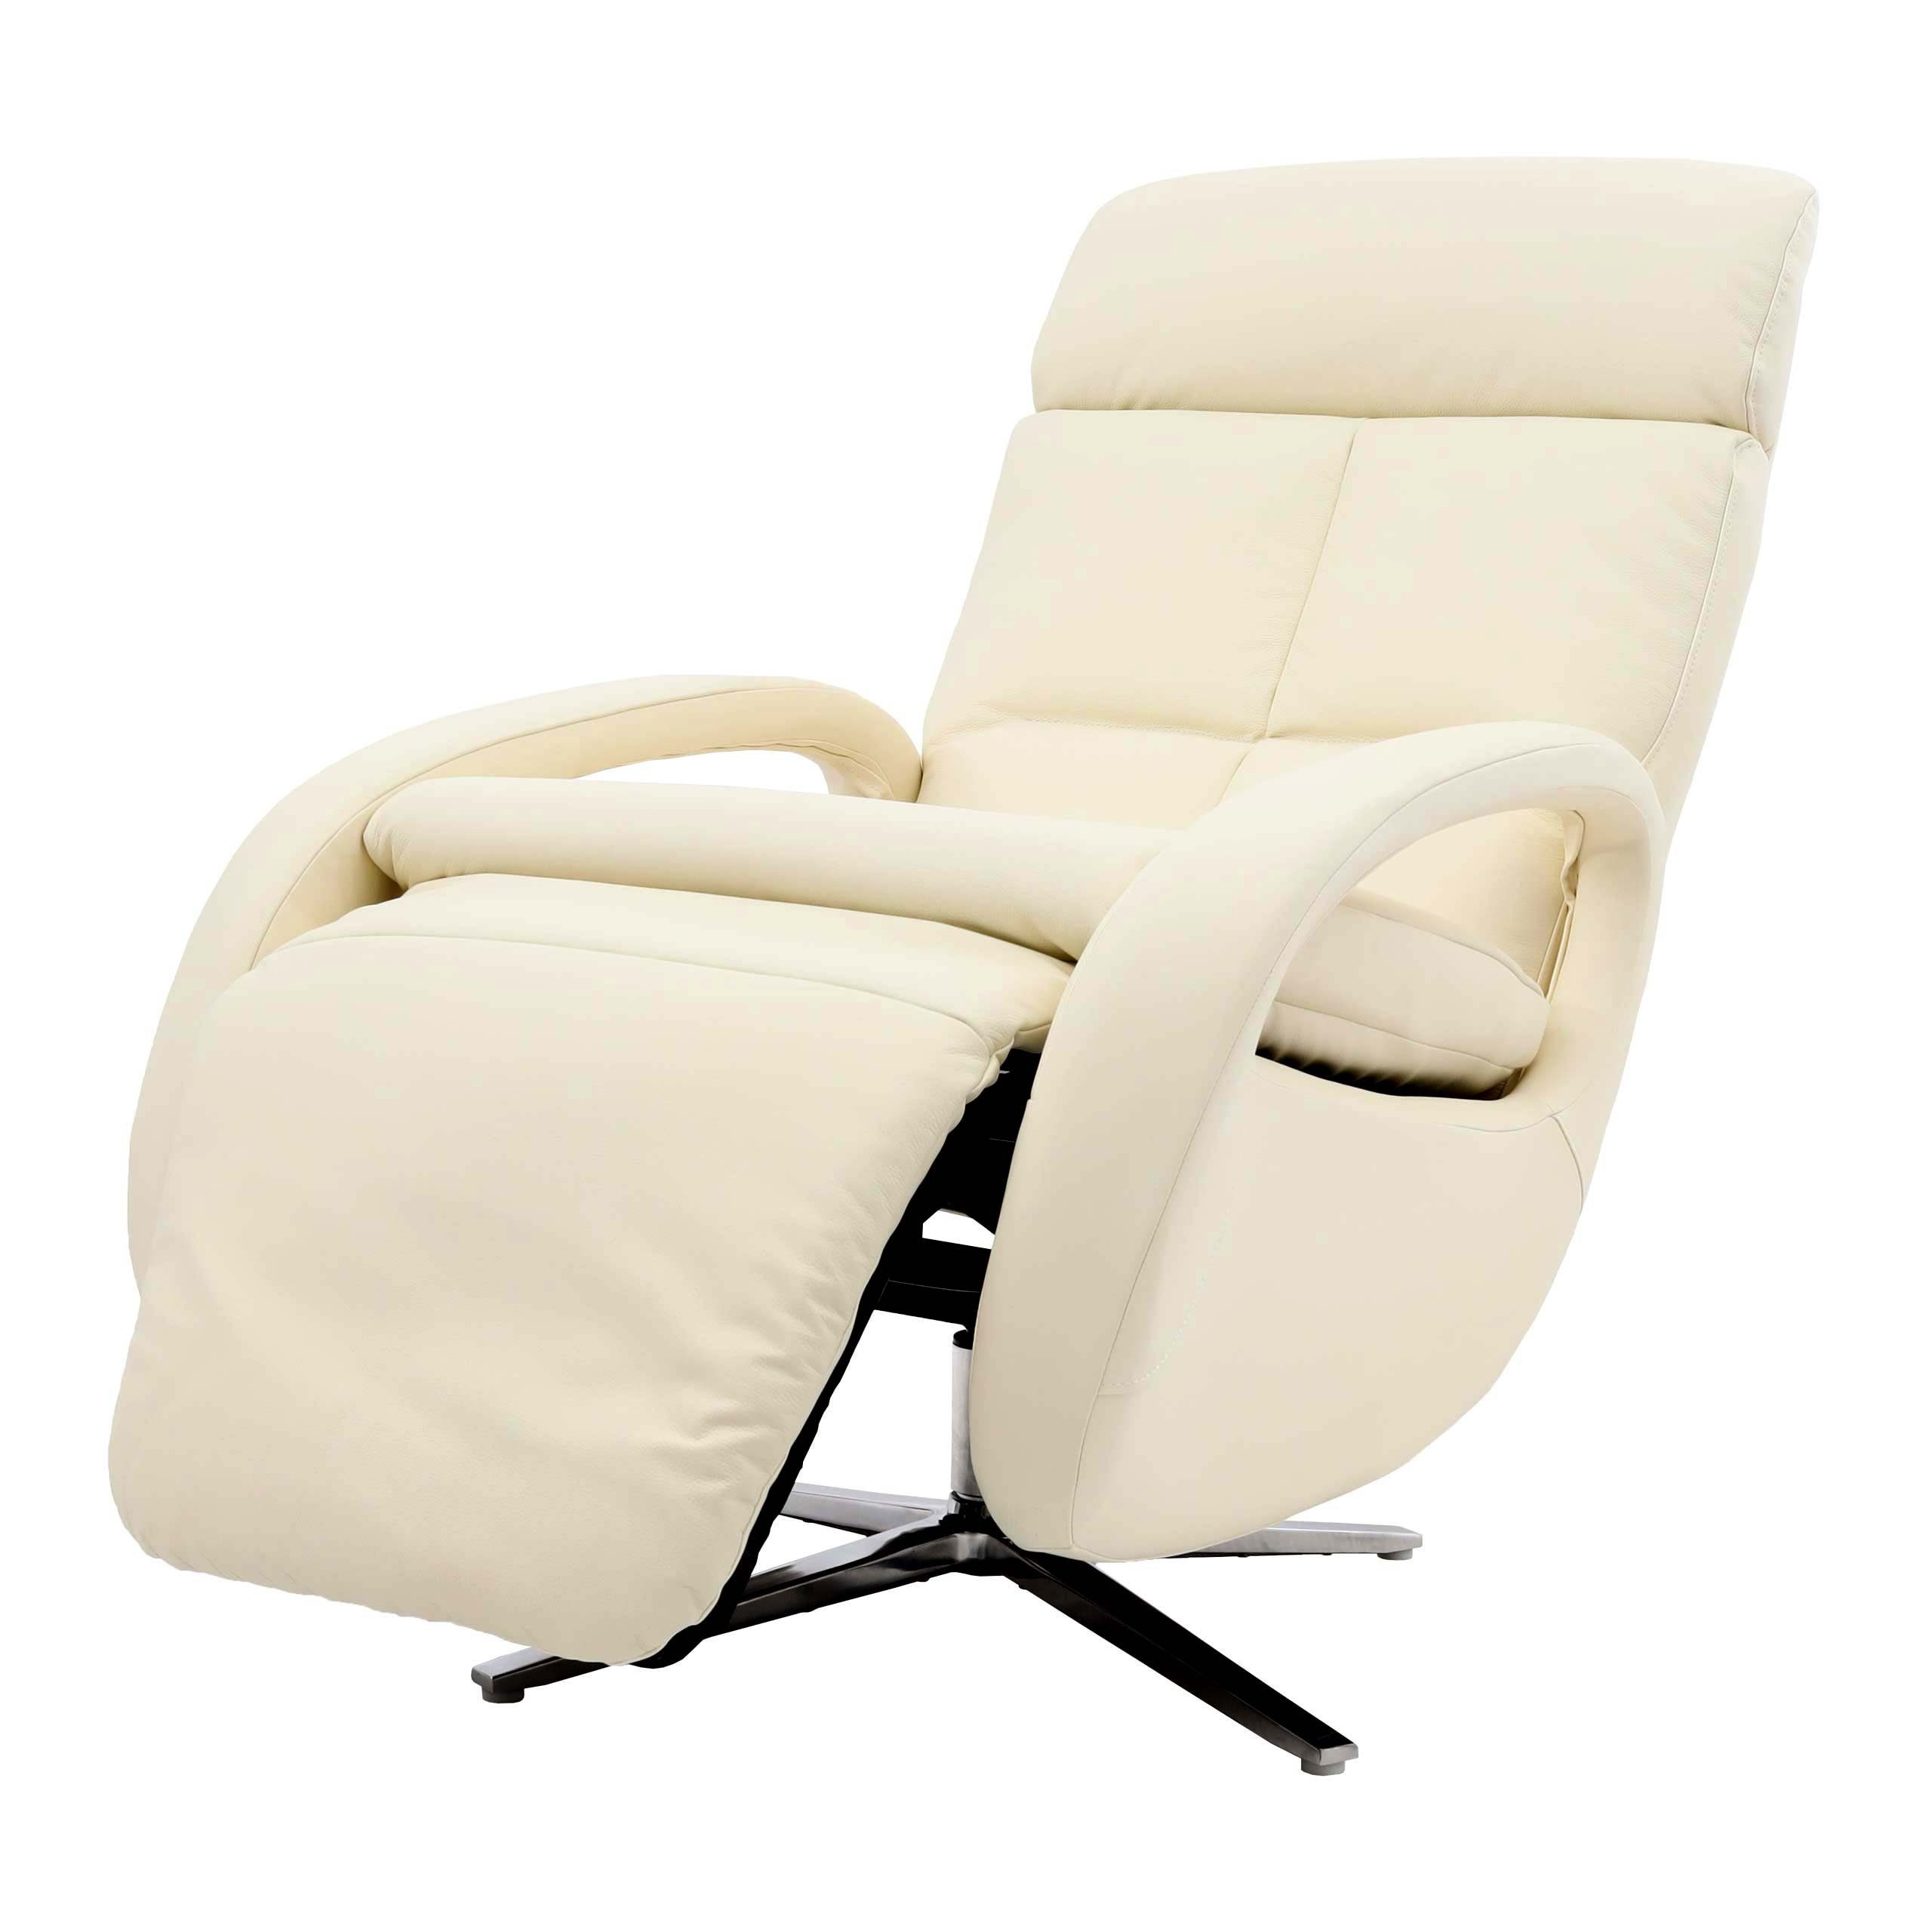 MCW Relaxsessel MCW-L11, Sessel durch Gewichtsverlagerung neigbar,Um 360°  drehbar